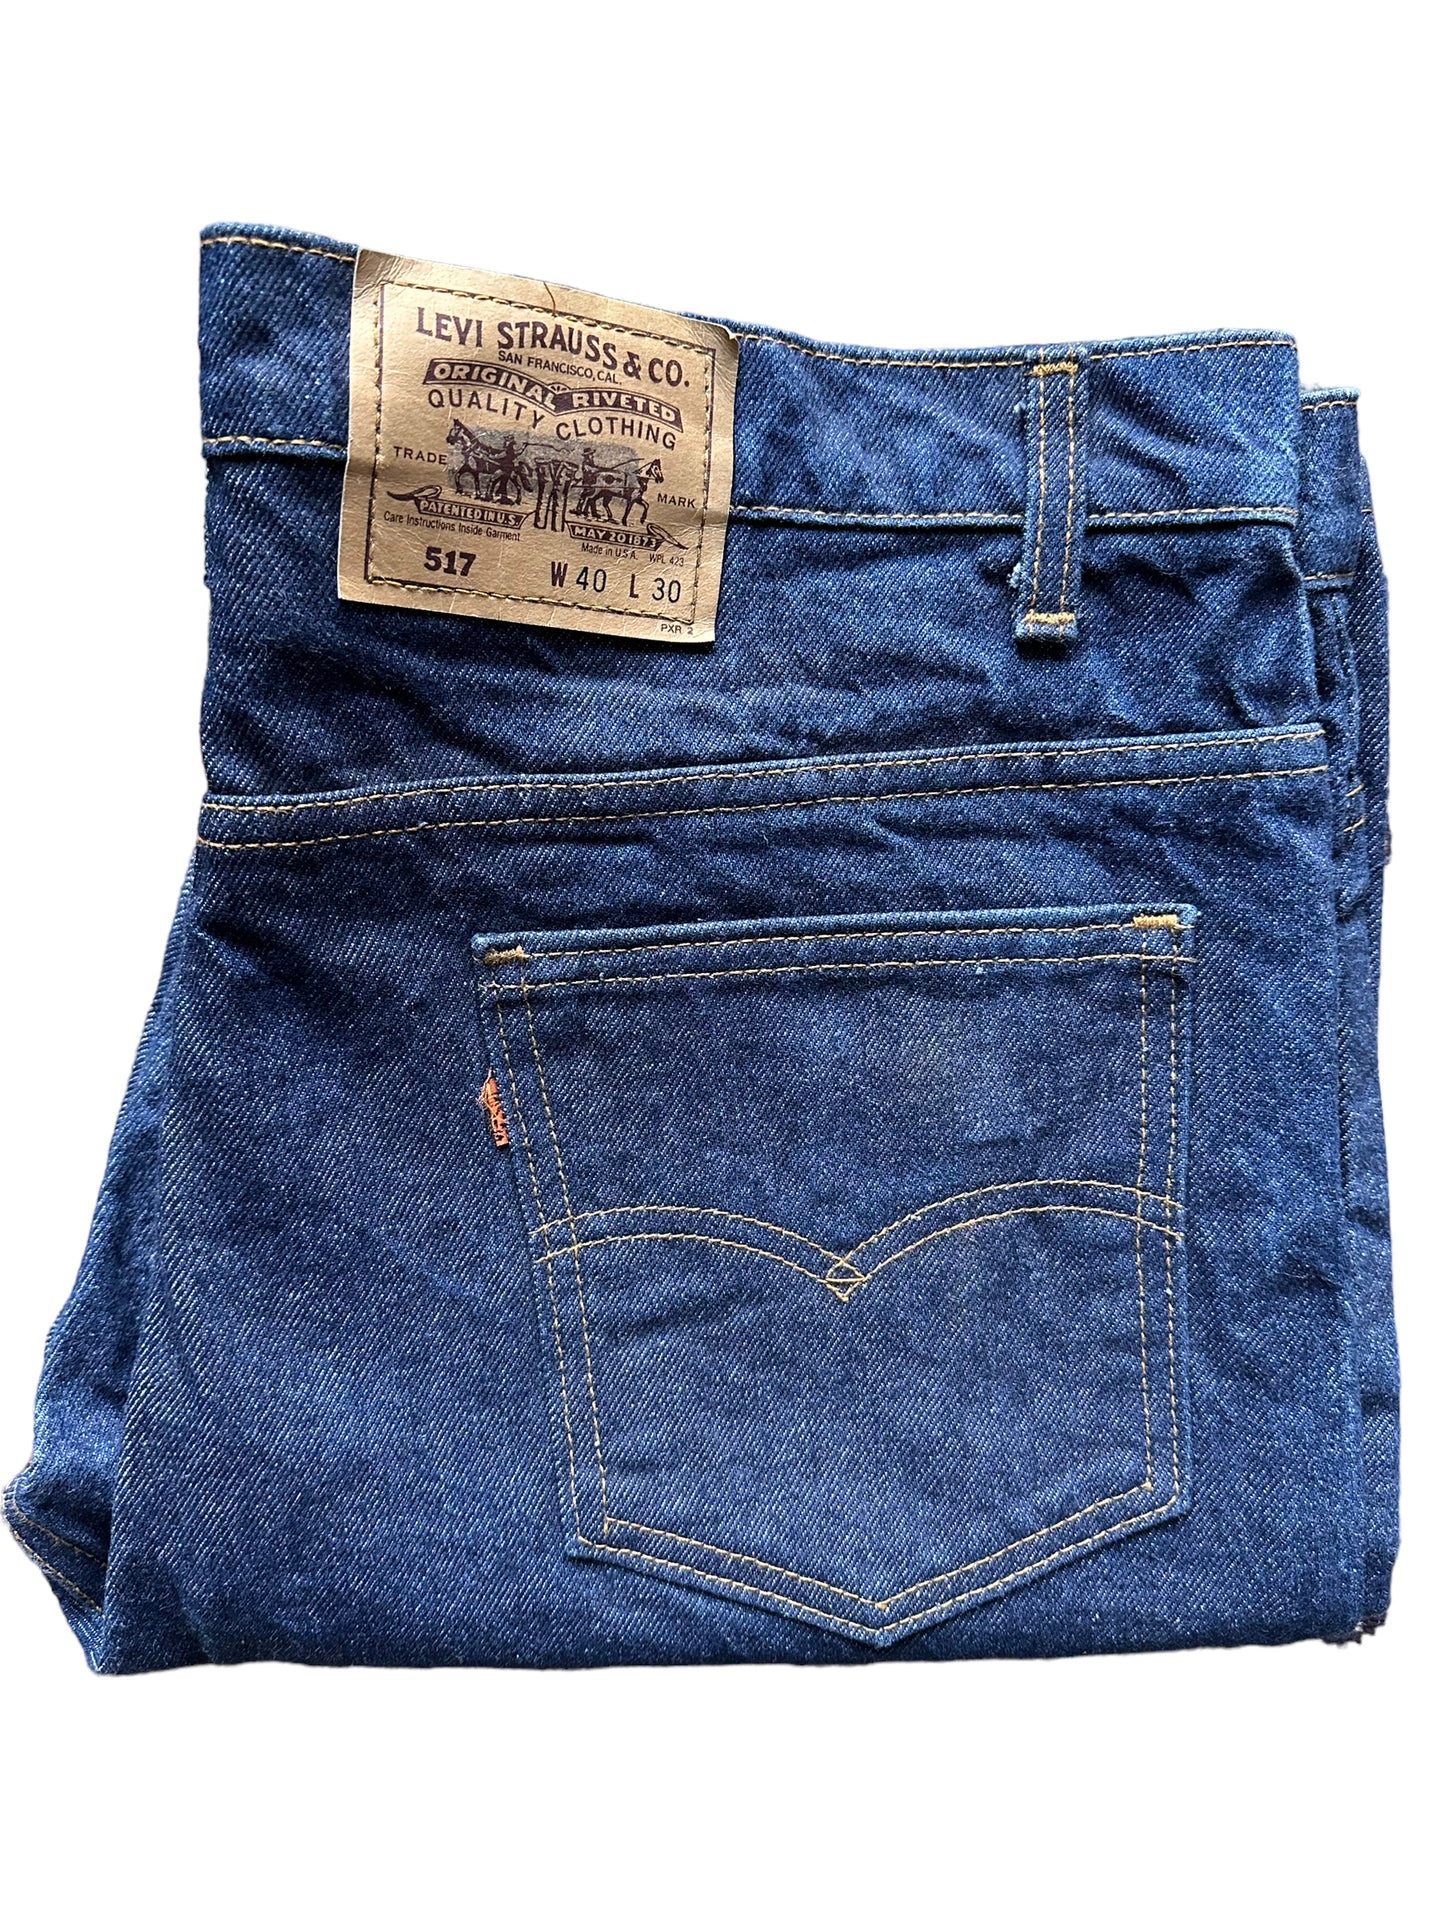 Vintage Orange Tab Levi's 517 Jeans 40x30 | Seattle Vintage Denim | Barn Owl Deadstock Jeans